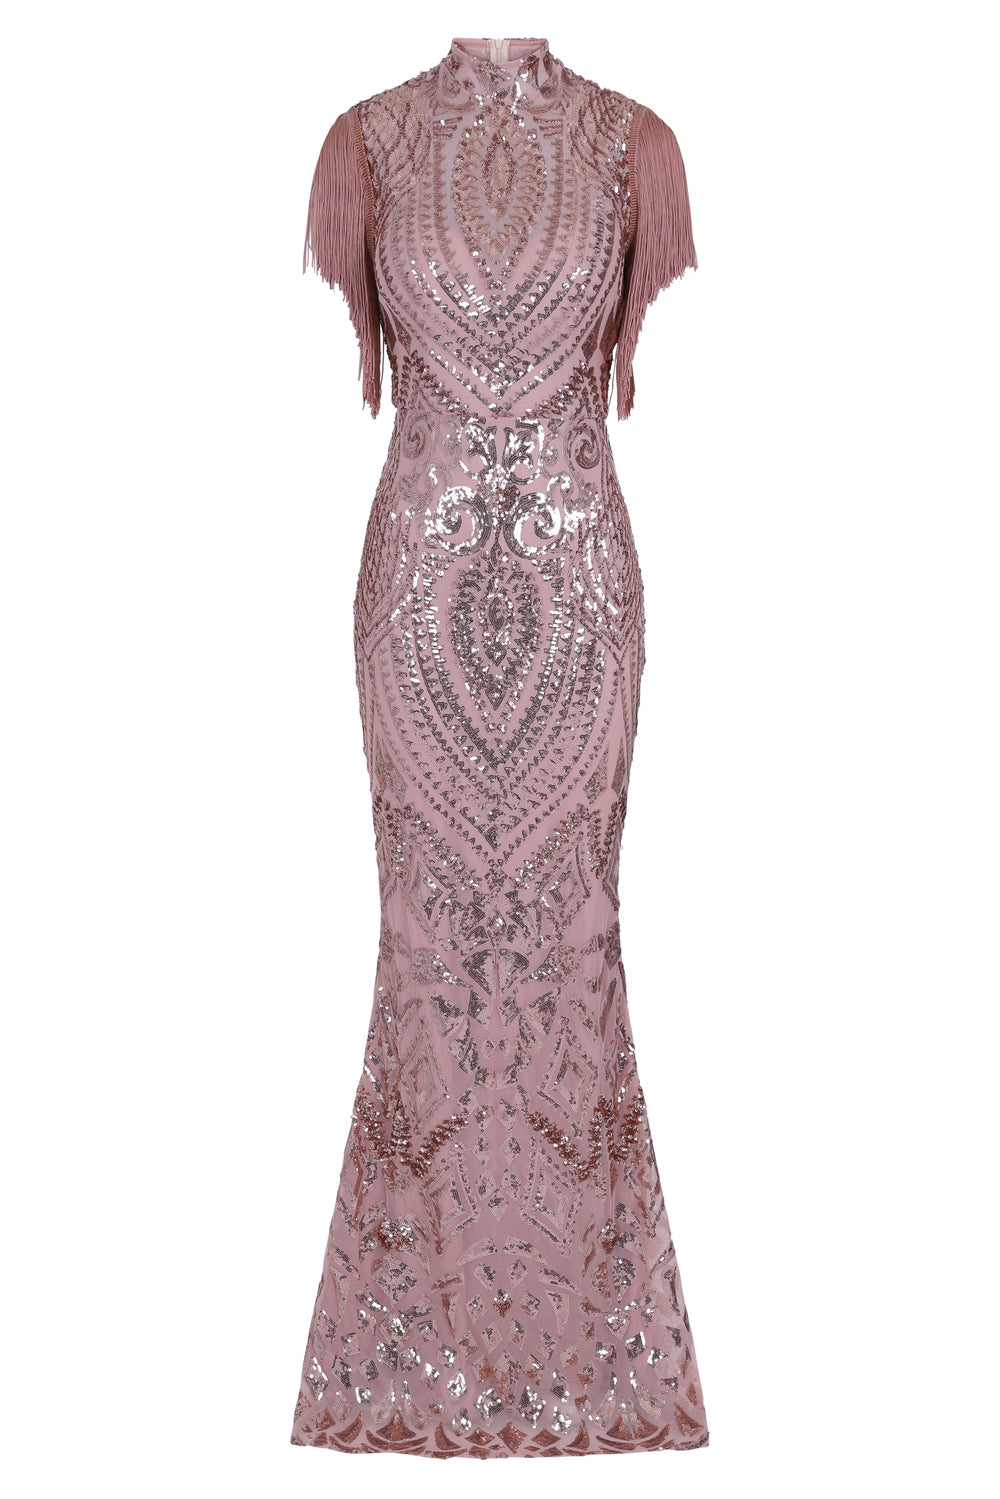 Magic Vip Rose Gold Luxe Tassel Fringe Sequin Embellished Illusion Maxi Dress